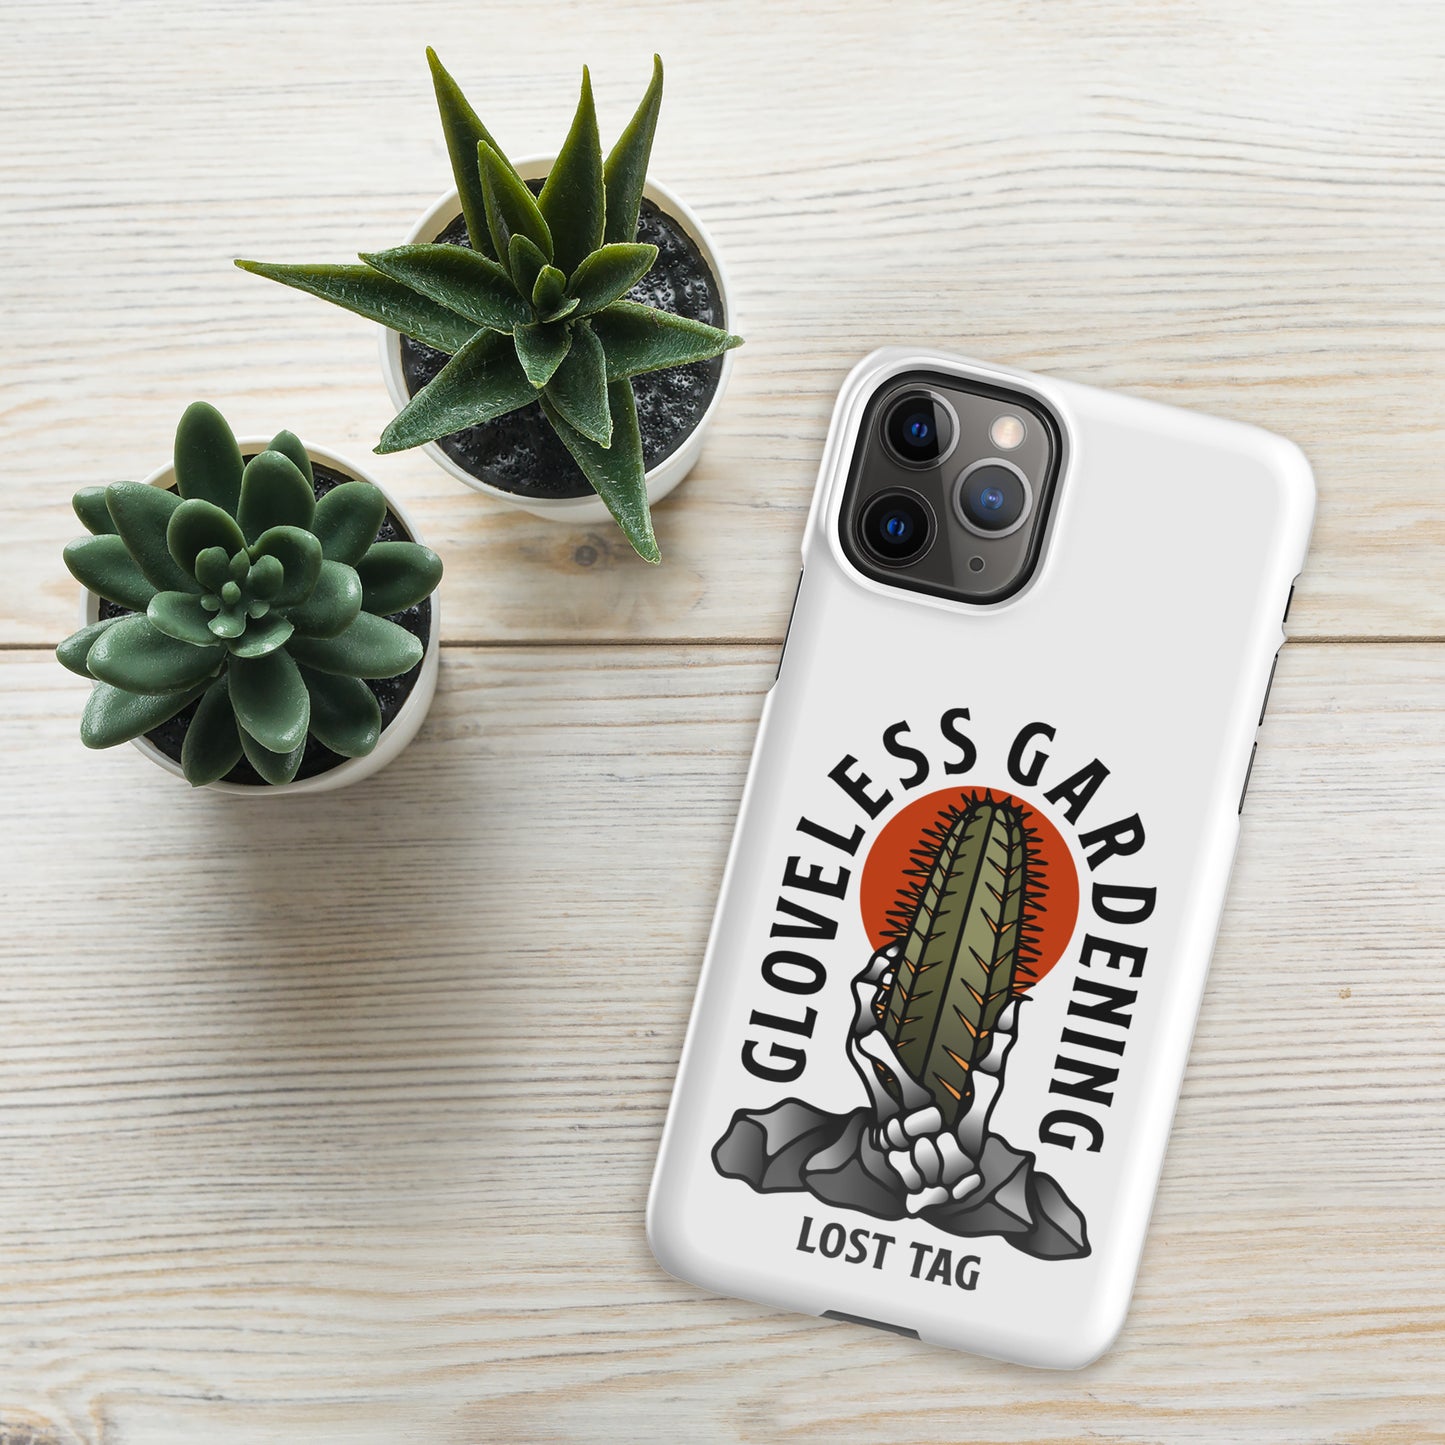 Gloveless Gardening snap case for iPhone®